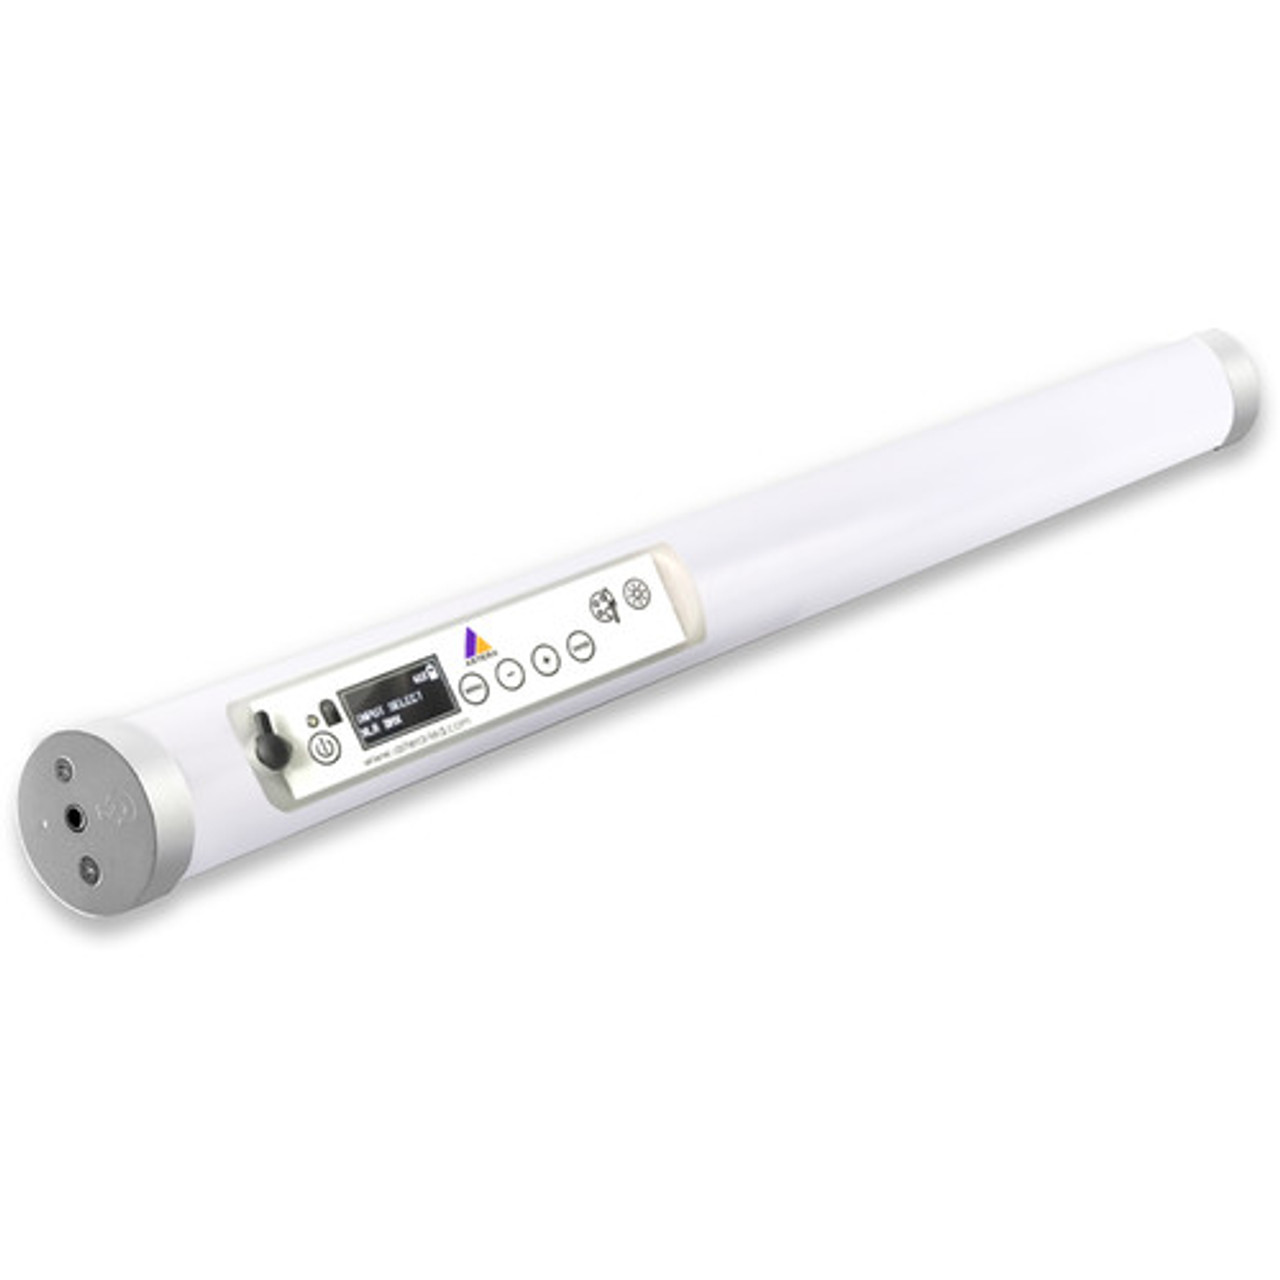 Astera FP2-QUAD SET *KIT* Helios Tube RGB LED Tube Light (1.8', 4-Light Kit) (FP2-QUAD SET *KIT*)